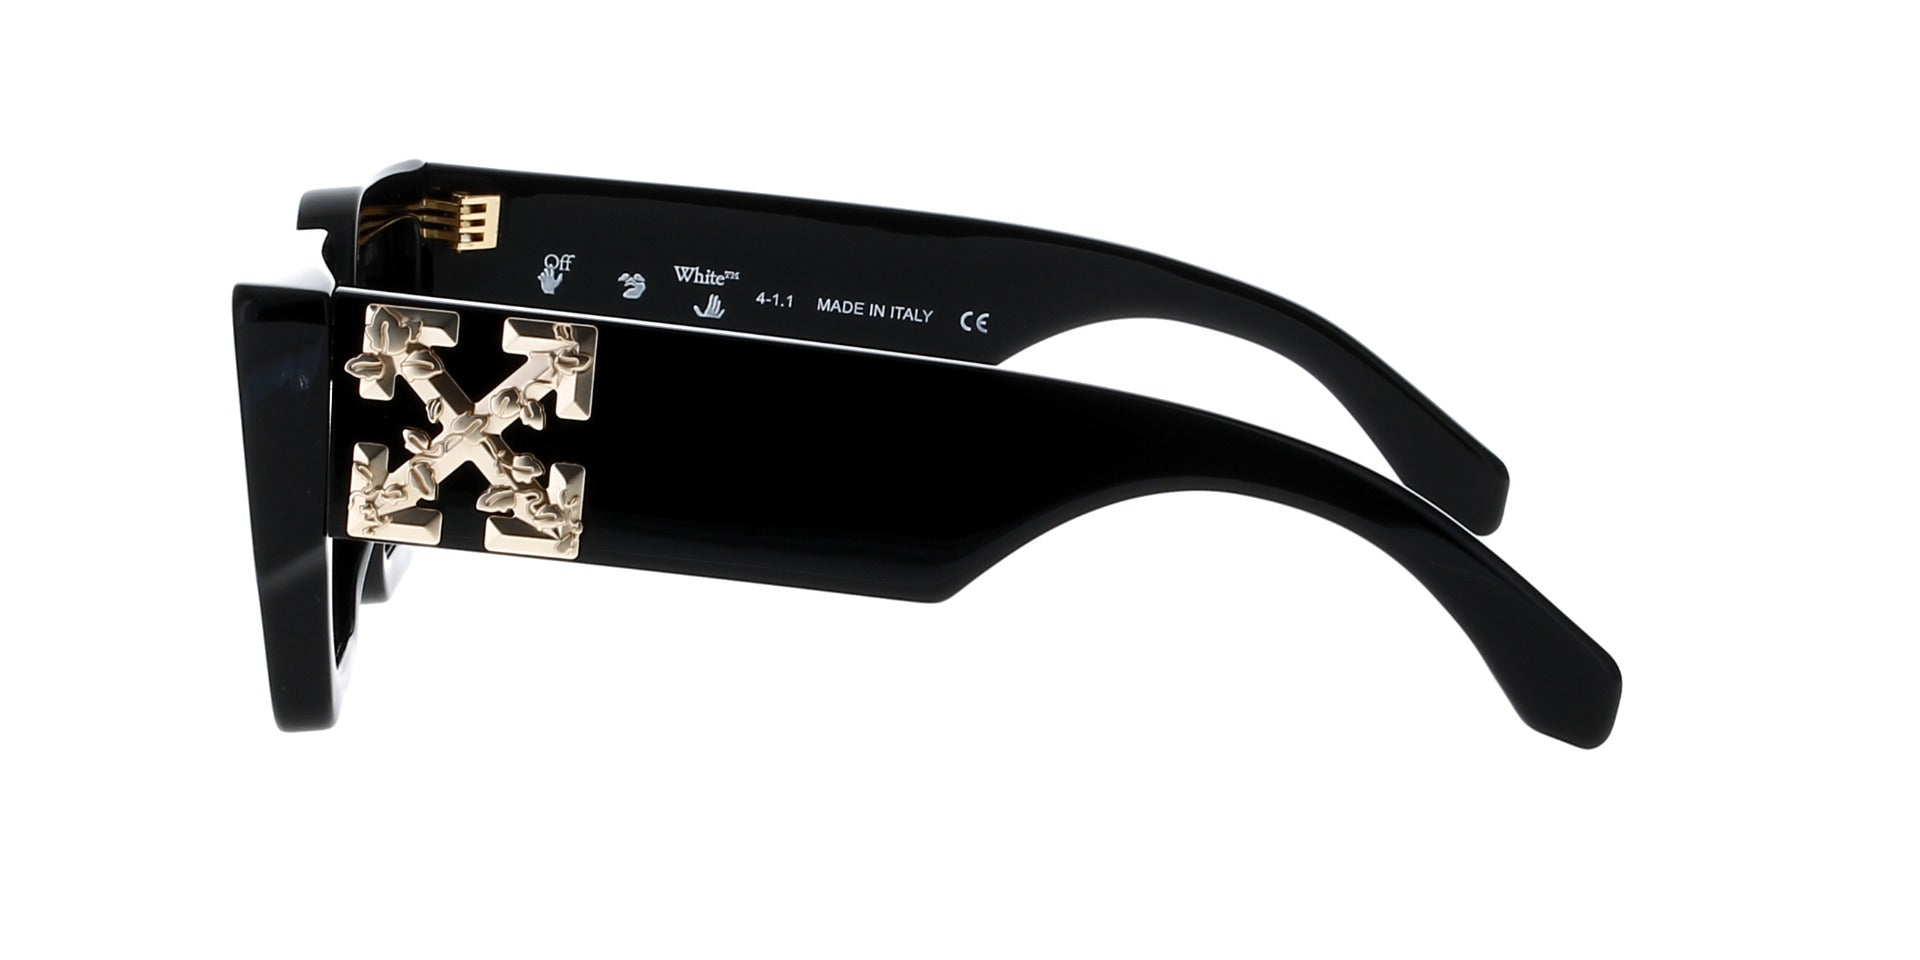 OFF-WHITE Catalina Rectangular Frame Sunglasses OERI003C99PLA0011007 'Black/ Dark Grey/Gold (OERI003Y21PLA0011007' - OERI003Y21PLA0011007